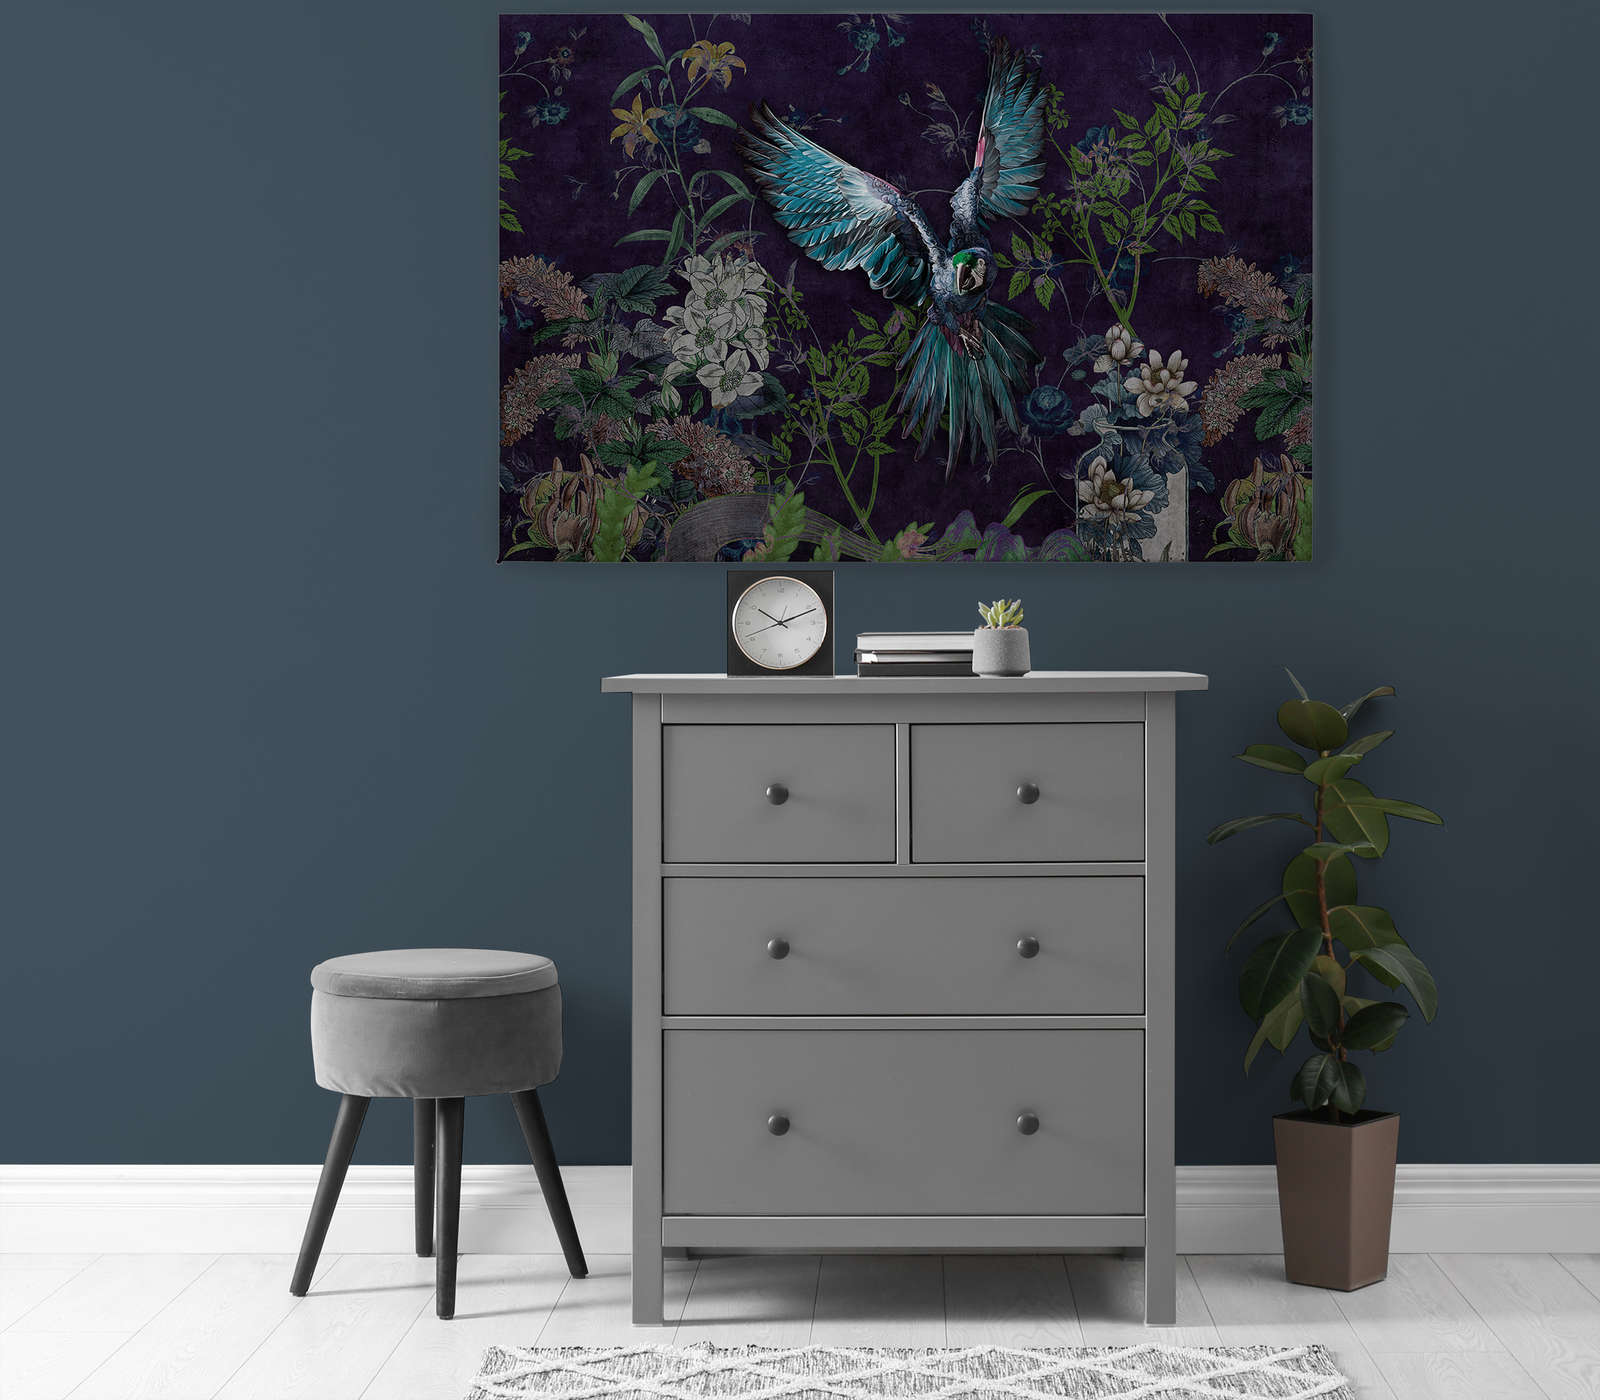             Tropical Hero 2 - Parrot Canvas painting Flowers & Black Background - 1.20 m x 0.80 m
        